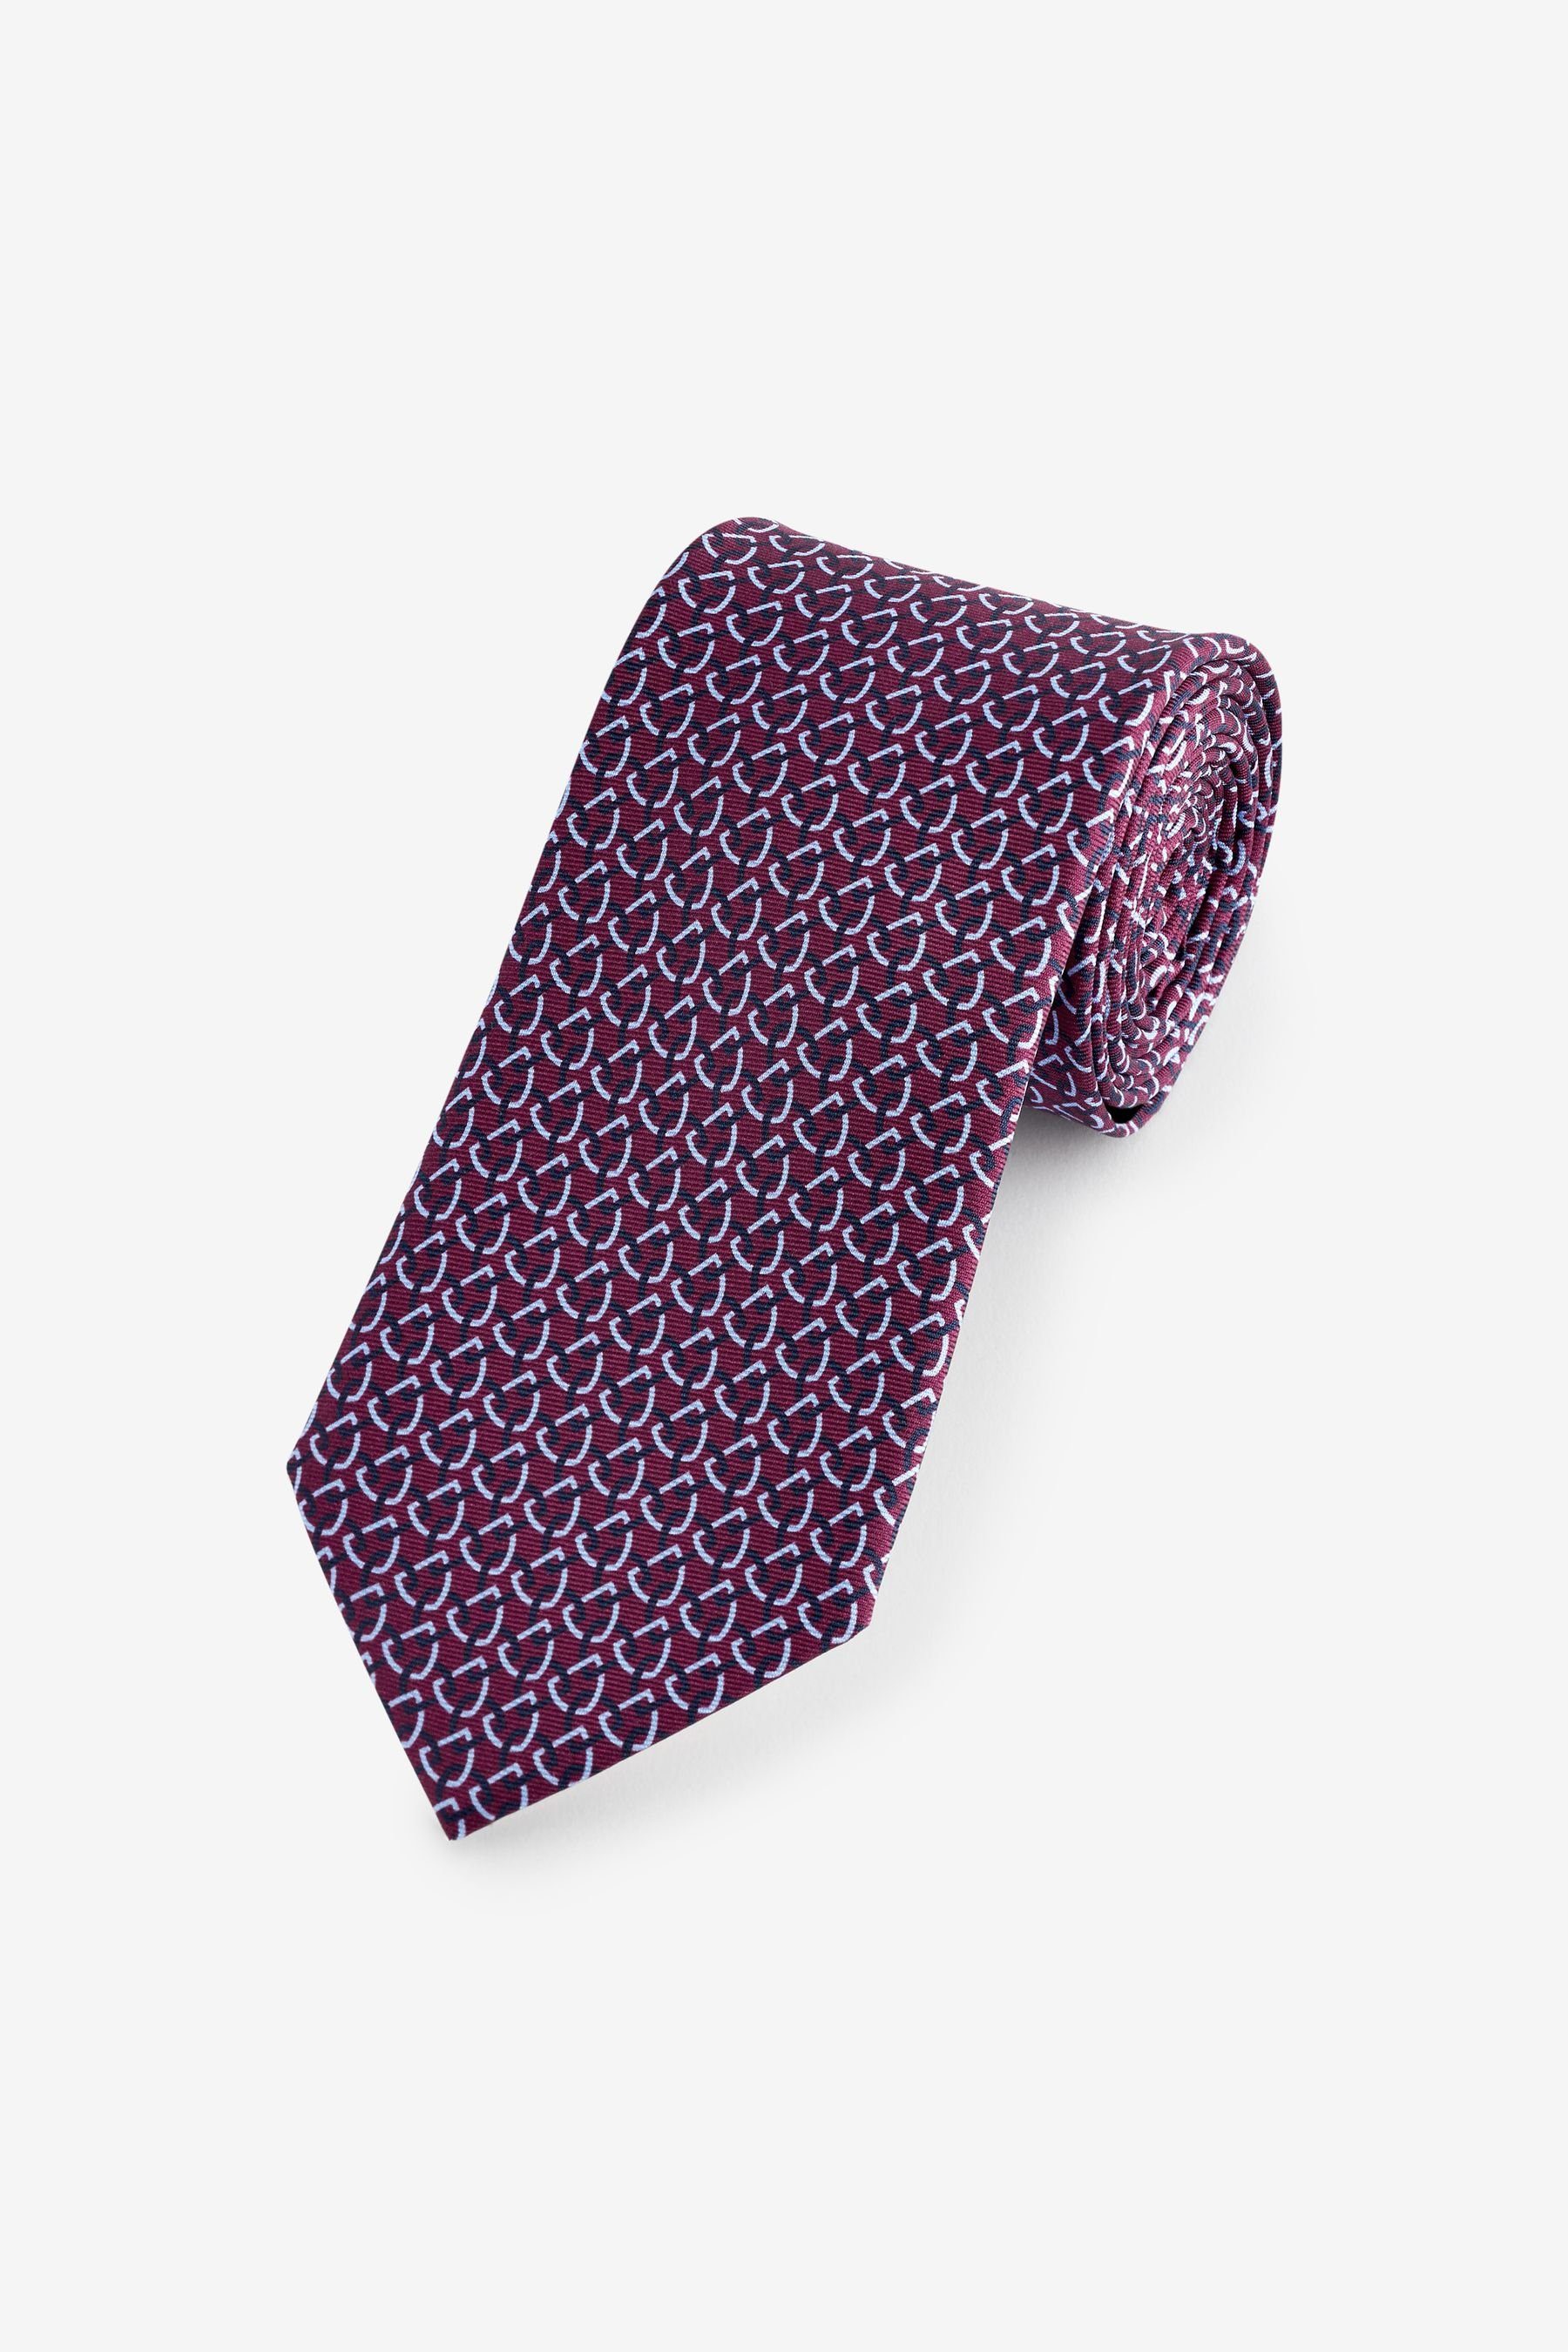 (1-St) hergestellt Signature-Krawatte, Italien in Krawatte Next Geometric Red